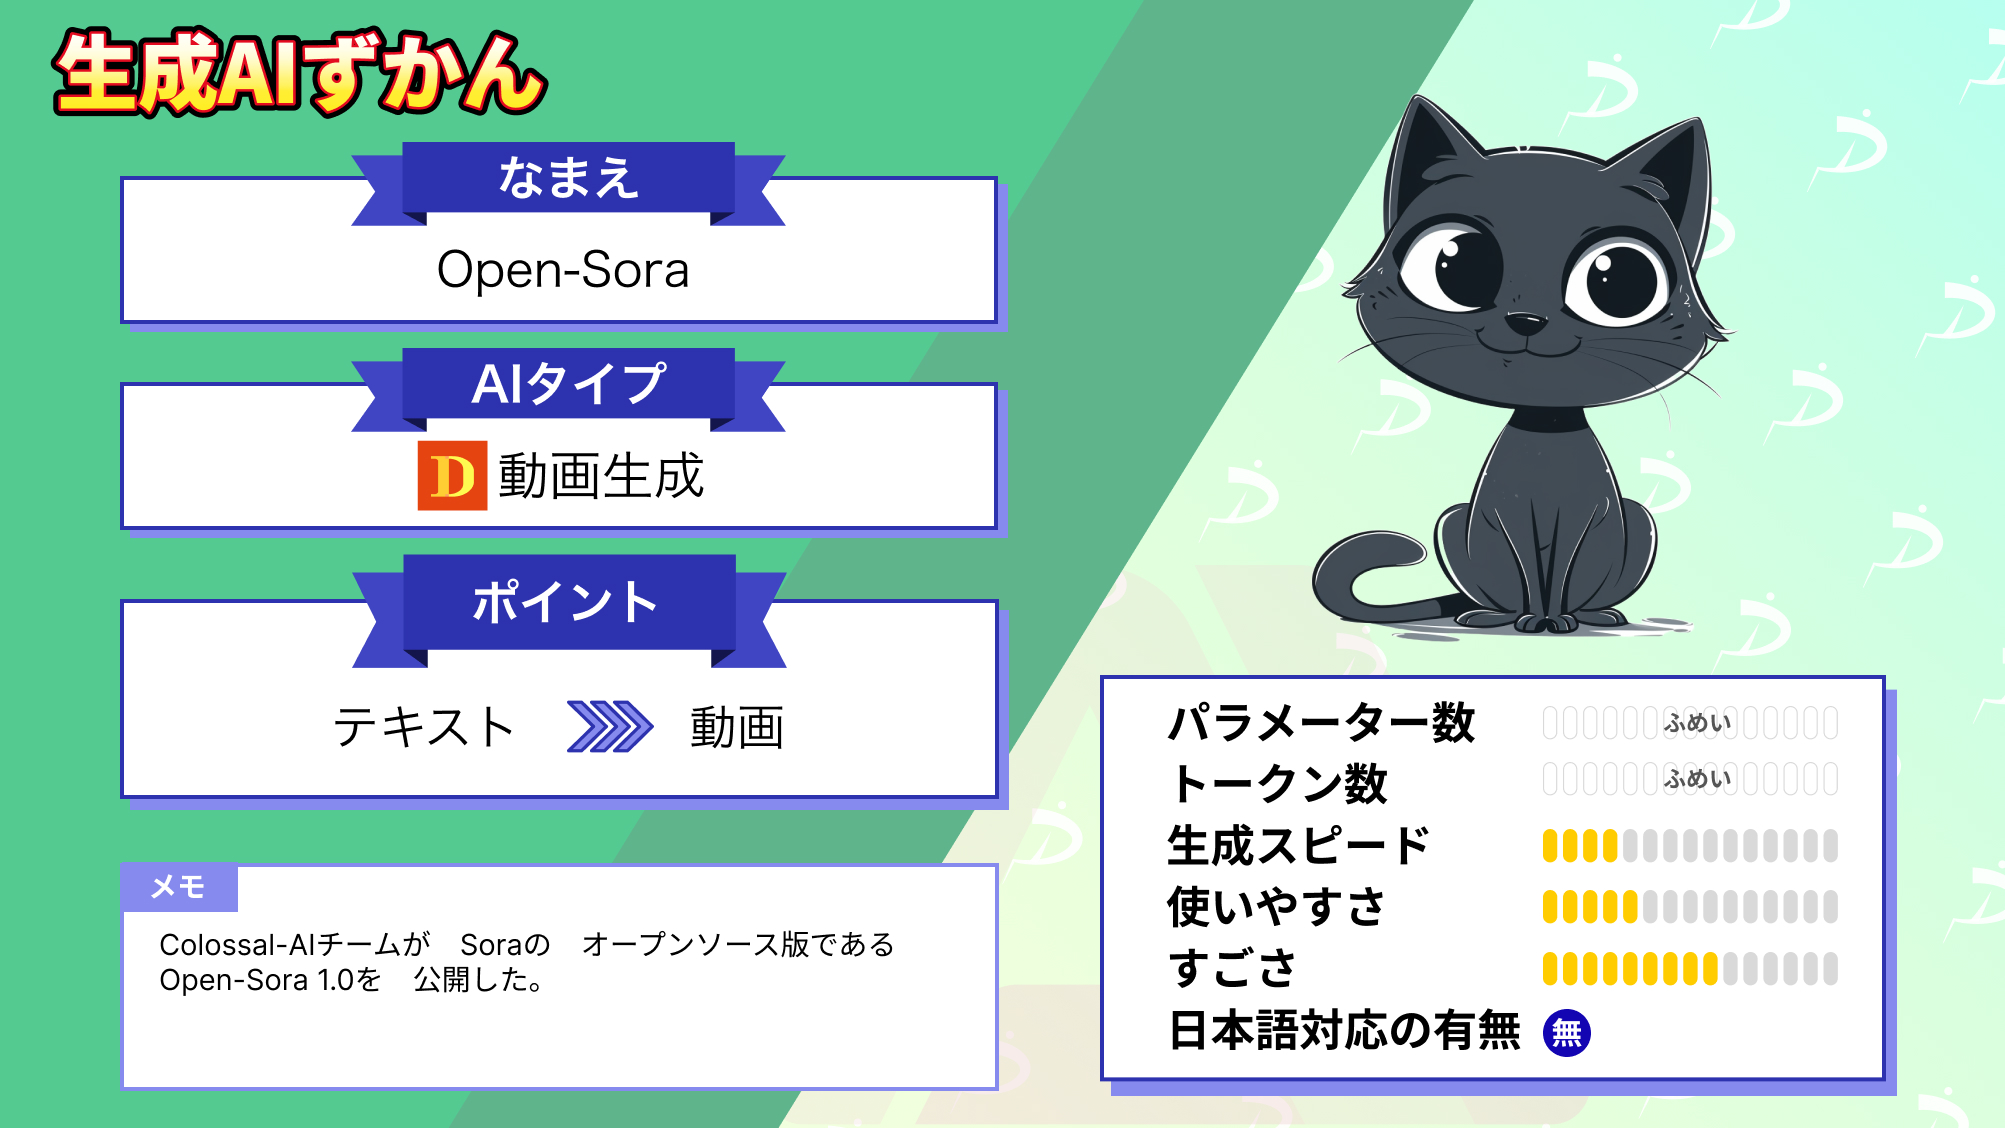 Open-Sora Sora 再現プロジェクト 本家 比較